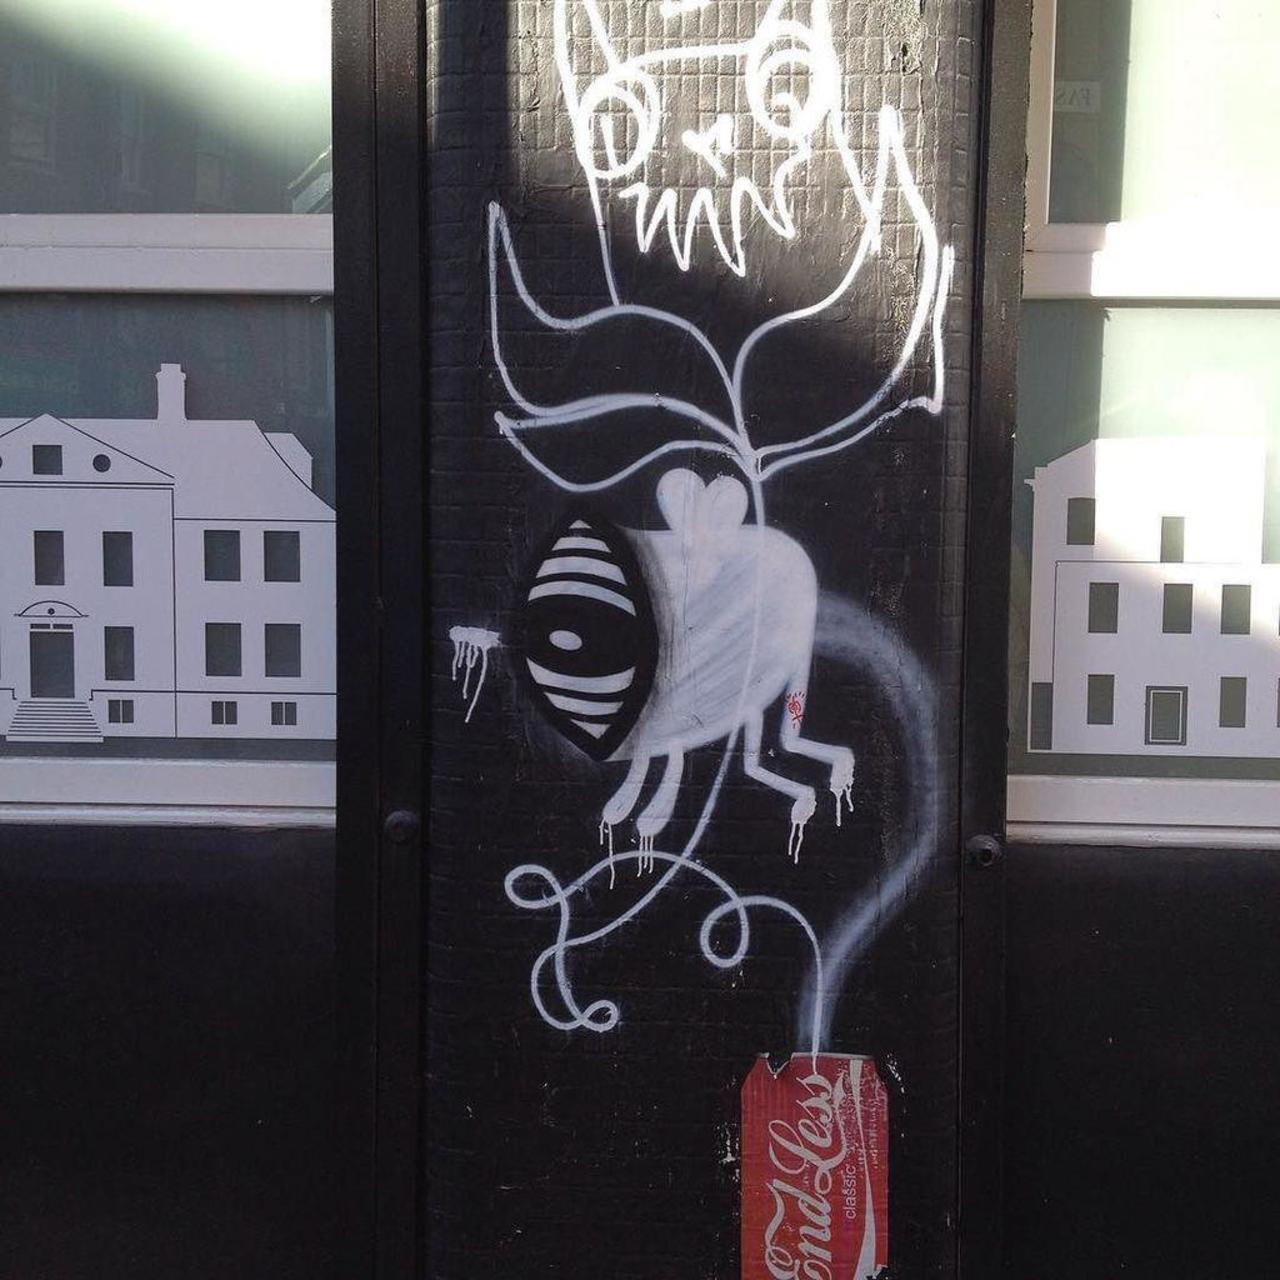 #streetart #graffiti #streetartlondon #london #thisislondon by isadarko http://t.co/LBUBzdBIou